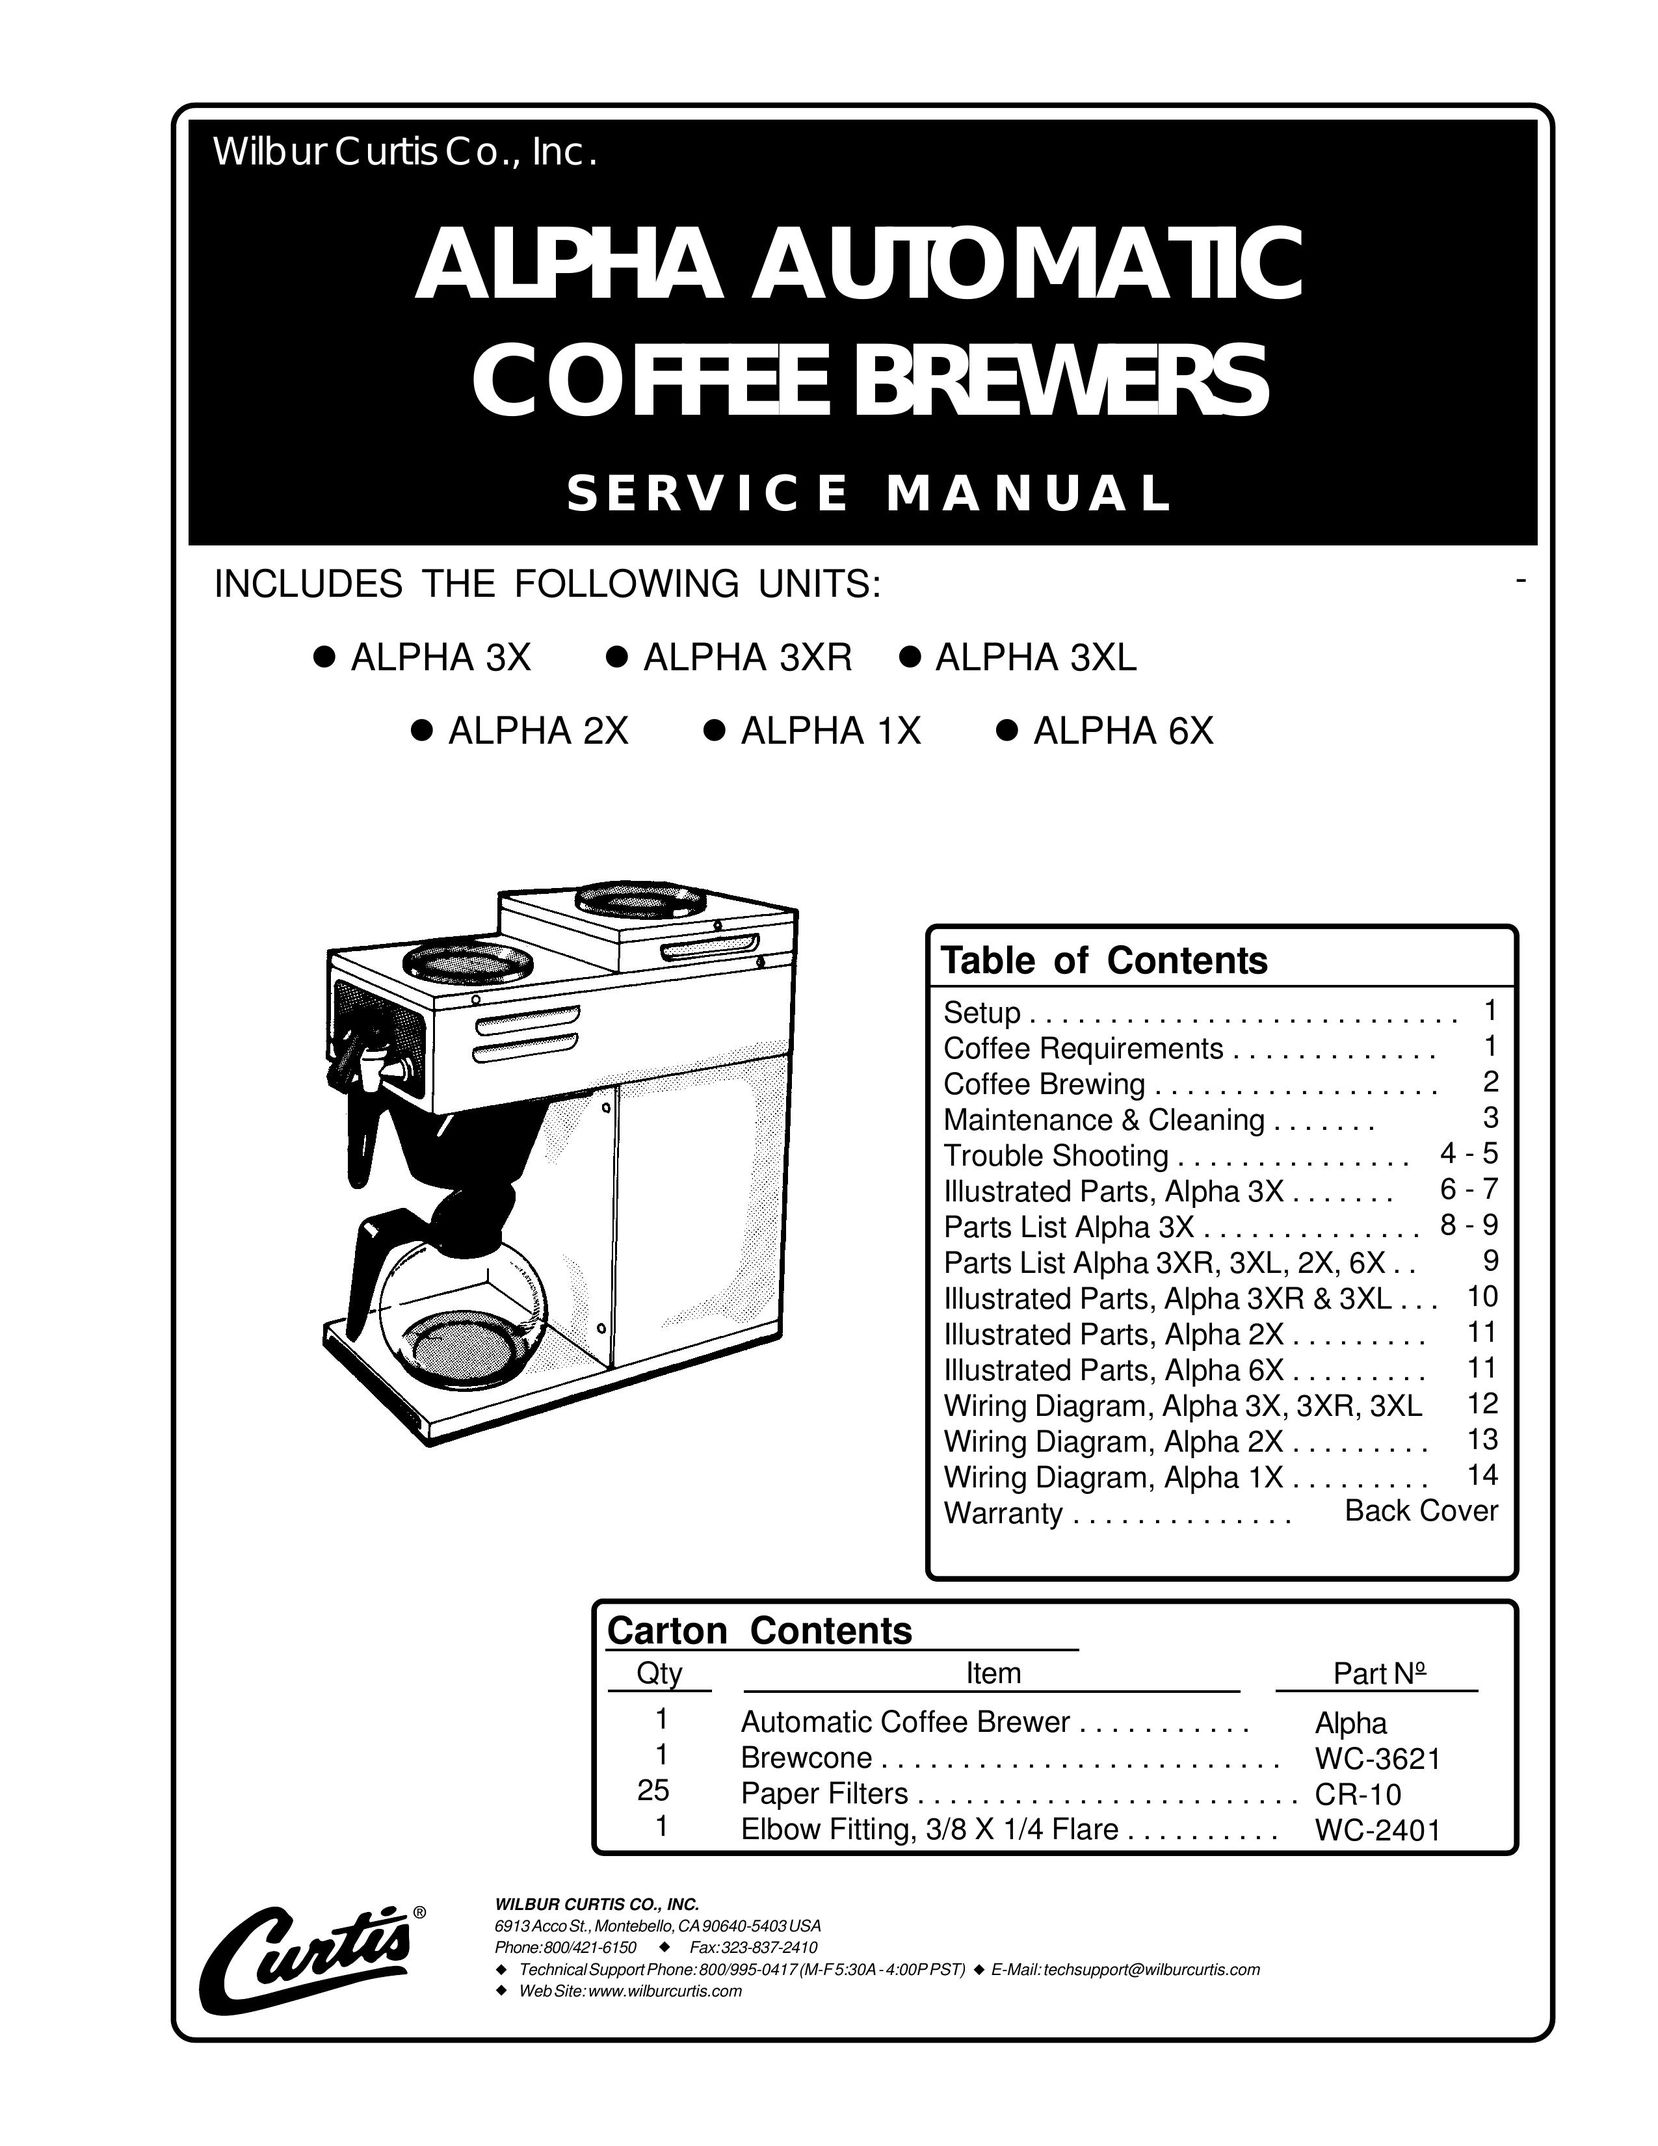 Wibur Curtis Company ALPHA 2X Coffeemaker User Manual